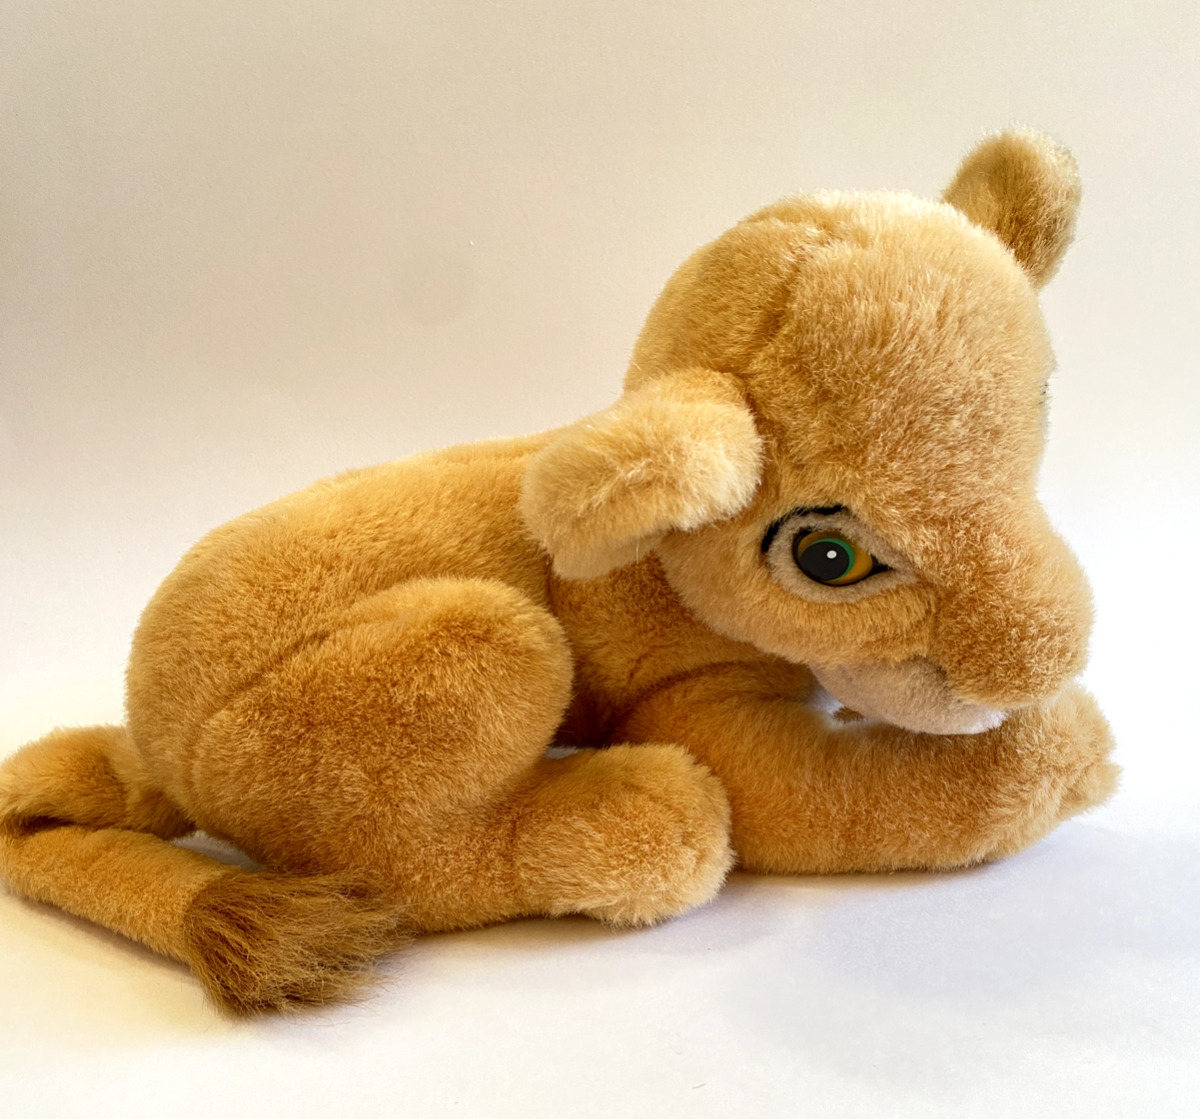 Disney Baby SIMBA PLUSH Vintage The Lion King Laying Stuffed Animal Stuffed Toy,